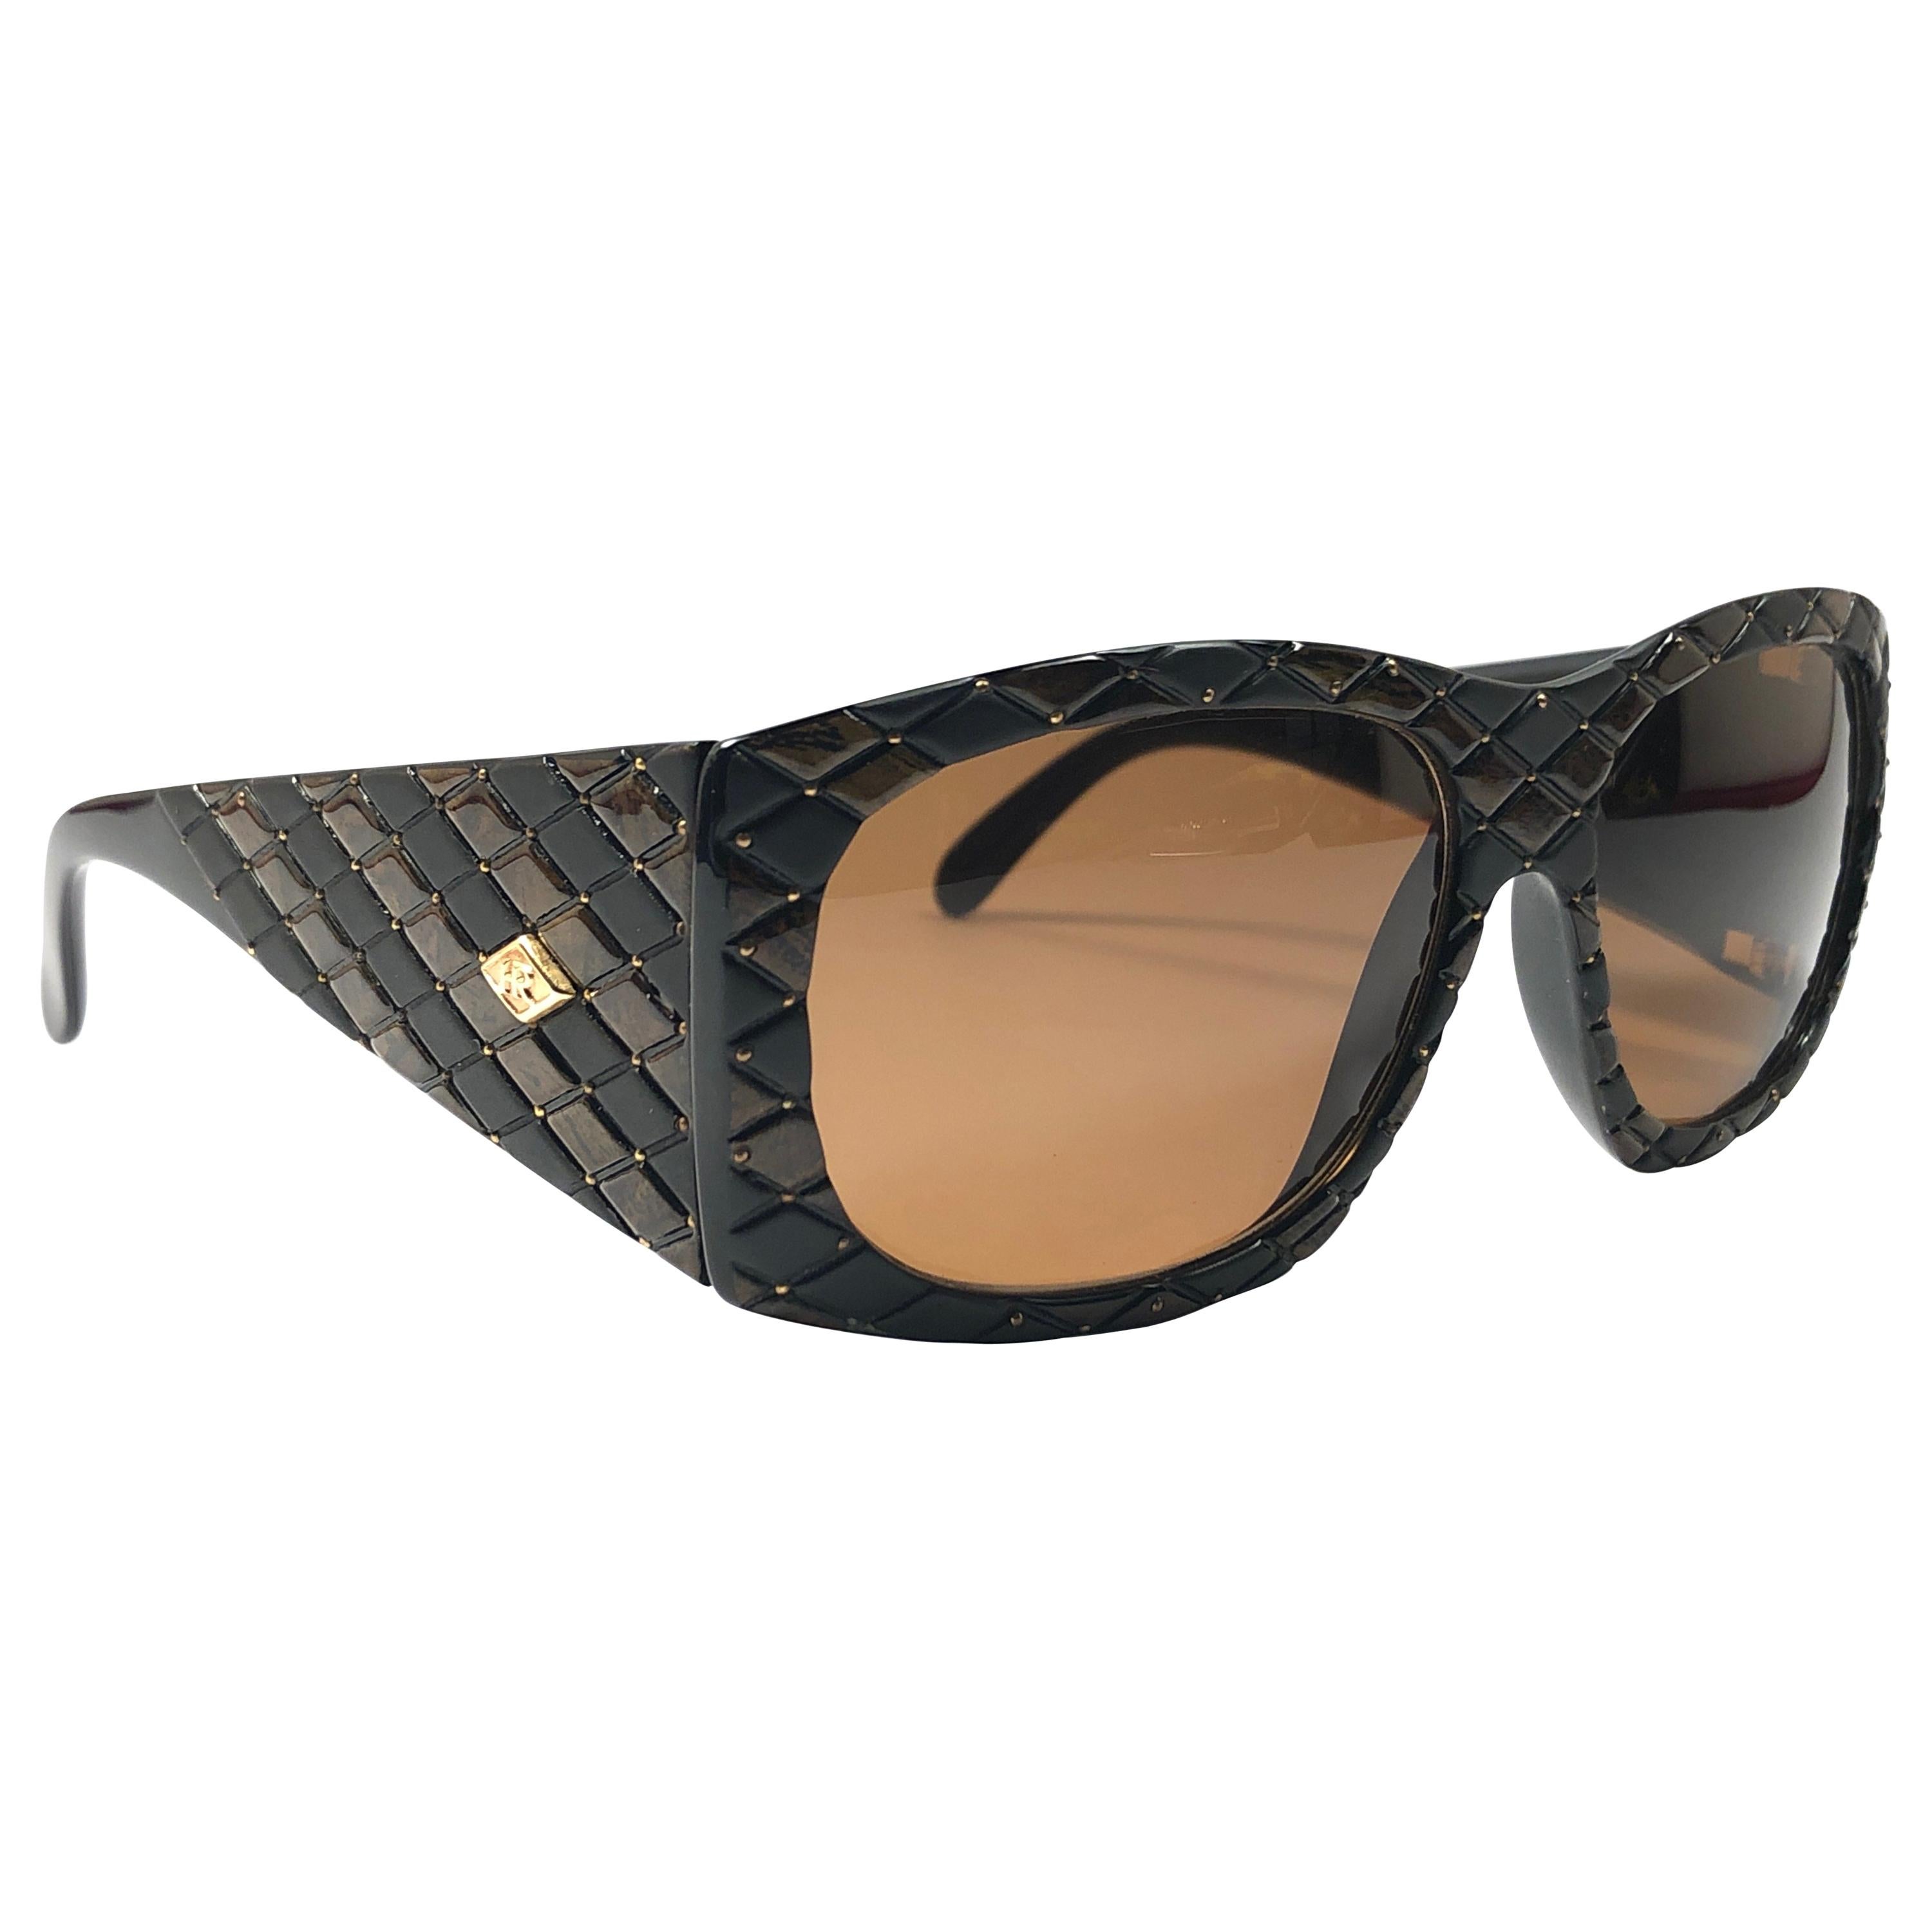 Helena Rubinstein Vintage Sunglasses HR 21 Black Gold 66mm NOS Made in France 